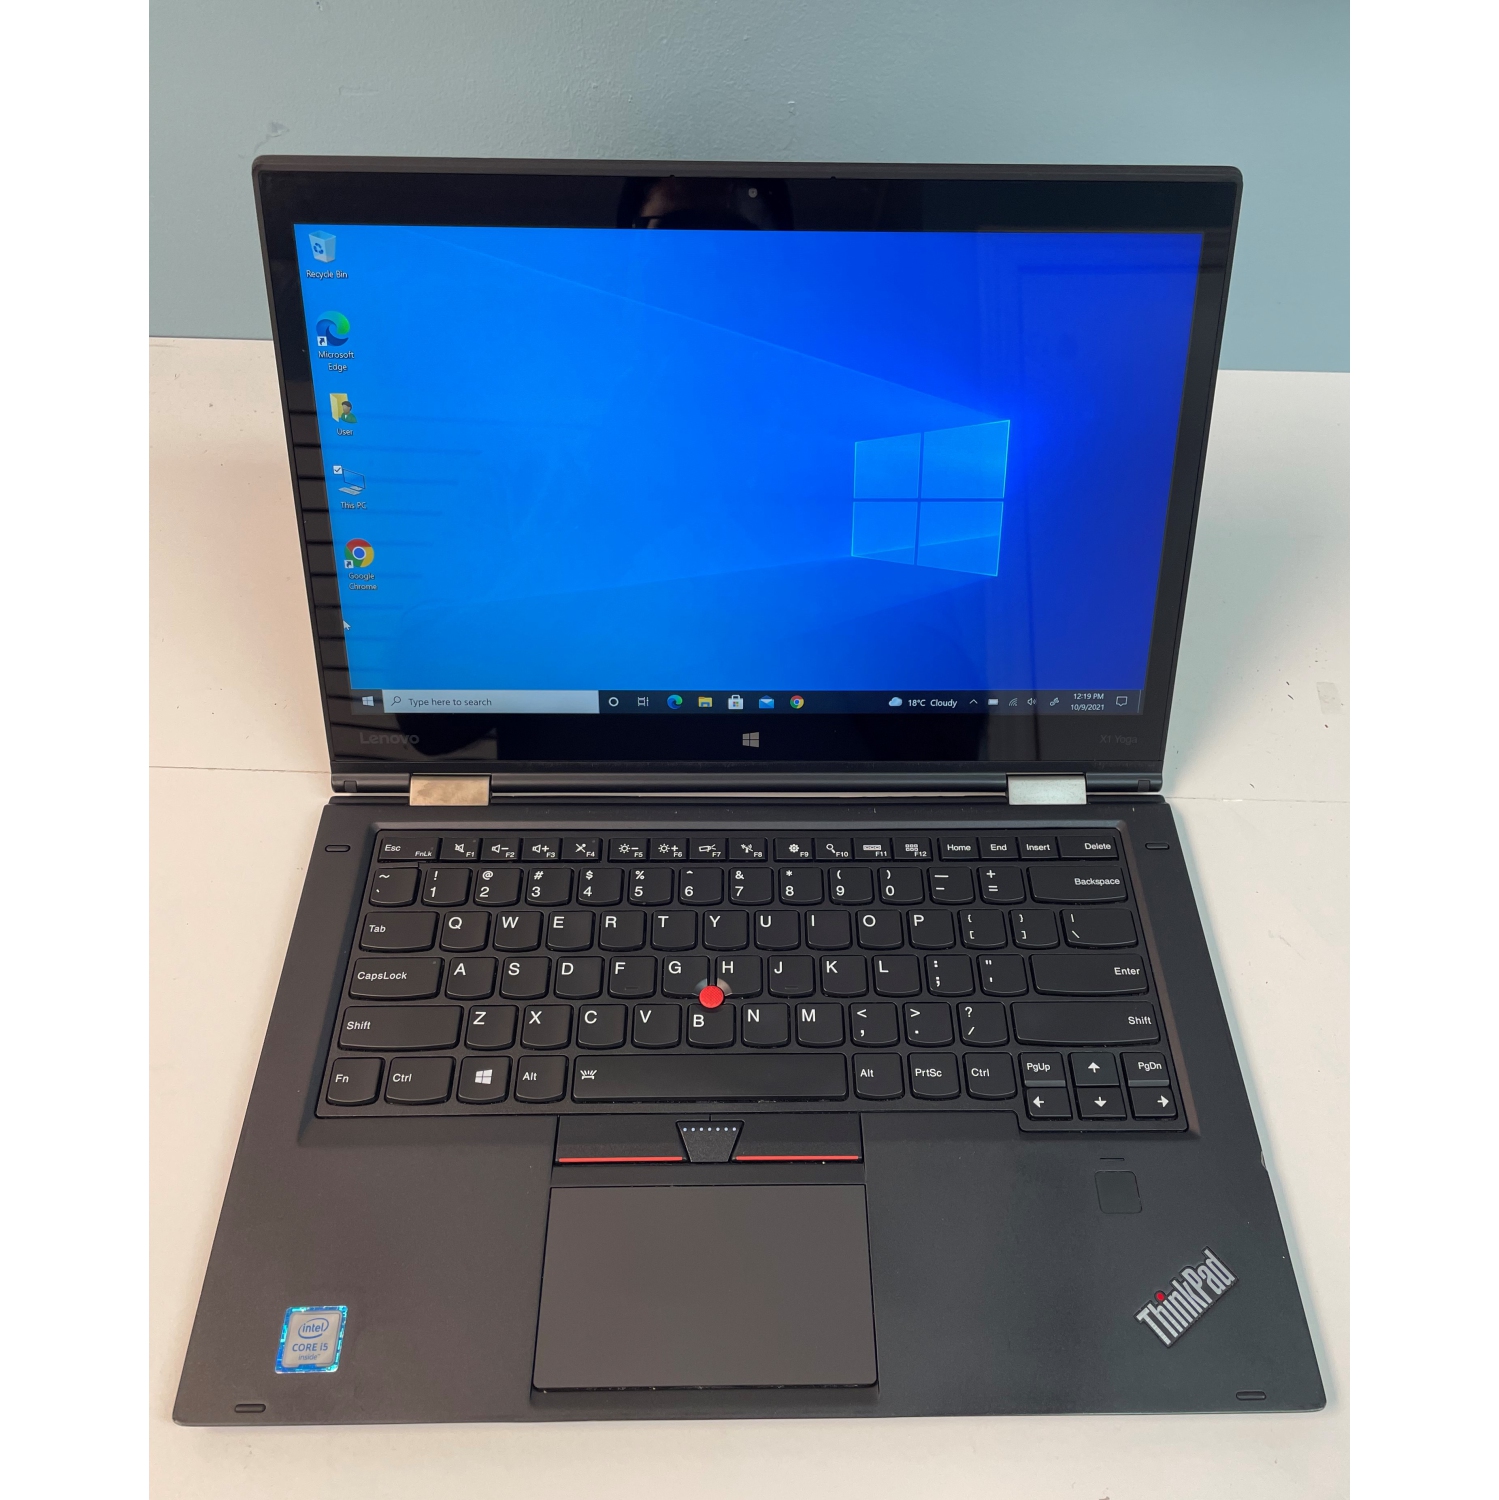 Refurbished (Good) - Lenovo ThinkPad X1 Yoga 1st Gen Touchscreen 2-IN-1 Ultrabook - Intel Core i5-6200U 2.3, 8GB, 256GB SSD, 14", Windows 10 PRO "â€œ